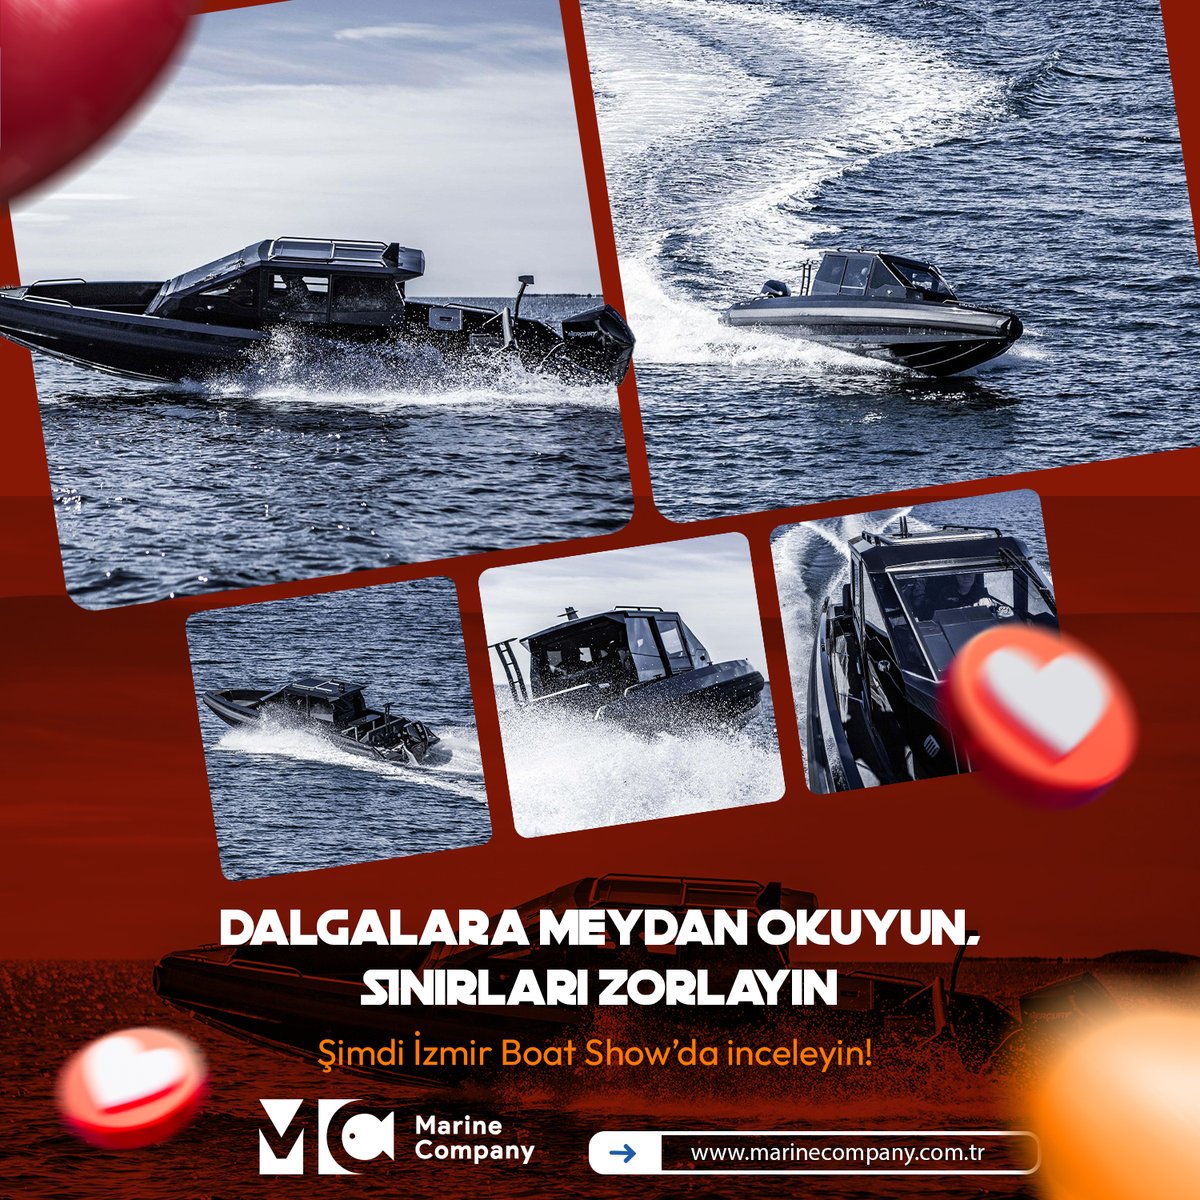 Şimdi İzmir Boat Show’da inceleyin!

#mast #izmirboatshow ##ironboats #ironboats827 #marinecompany #yachtworld #yachtlife #yachting #sailing ⚓